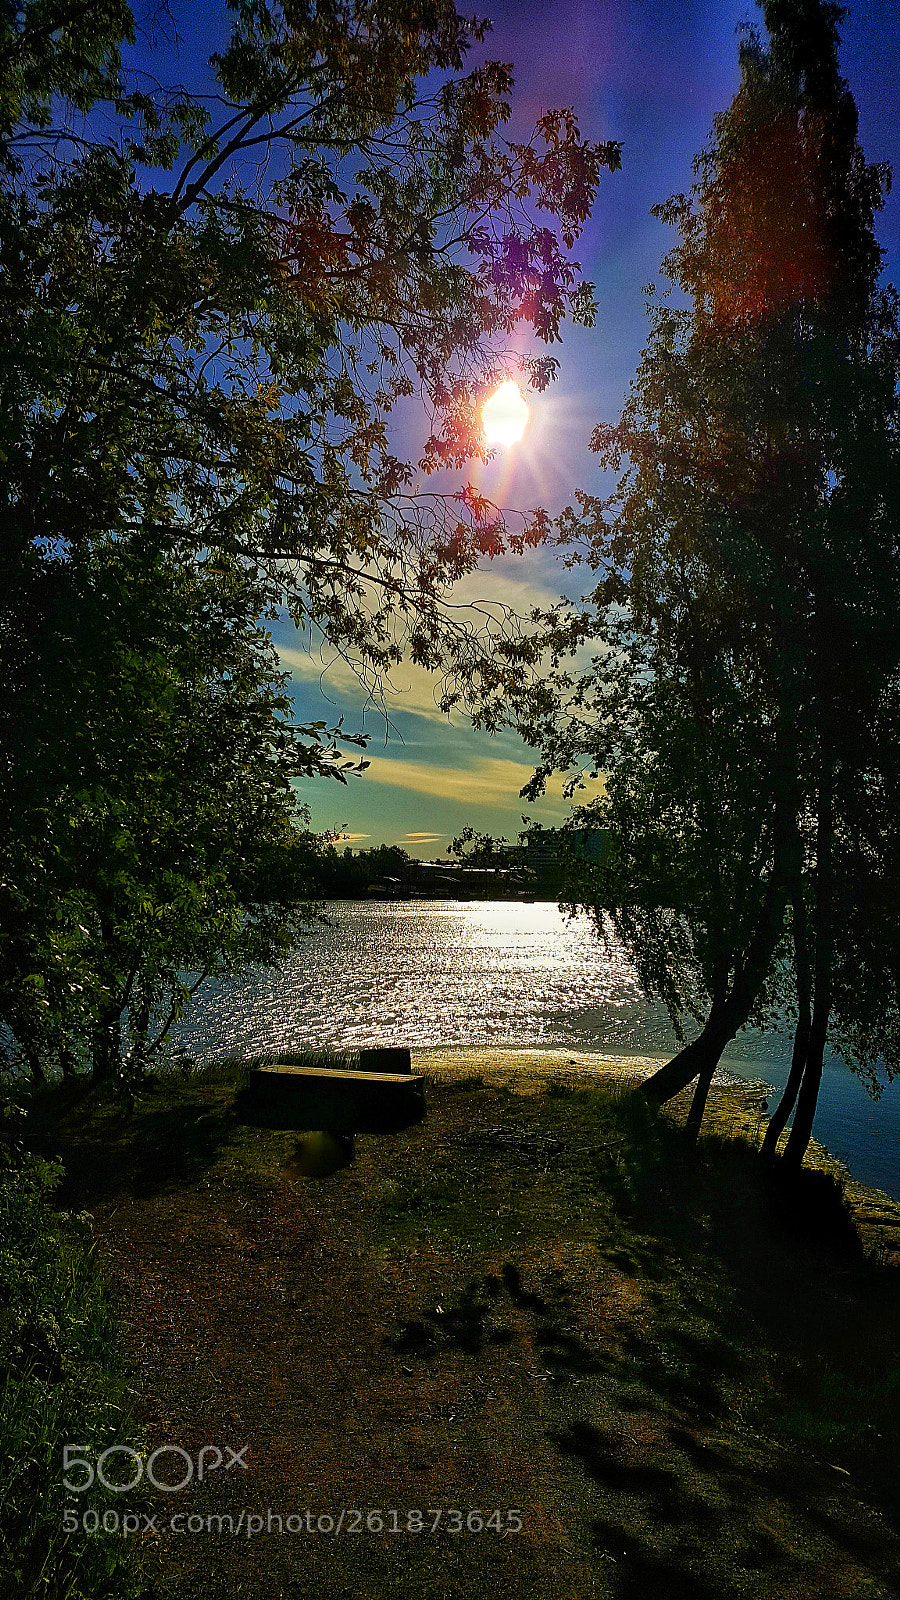 Samsung Galaxy S6 sample photo. The sunny river photography